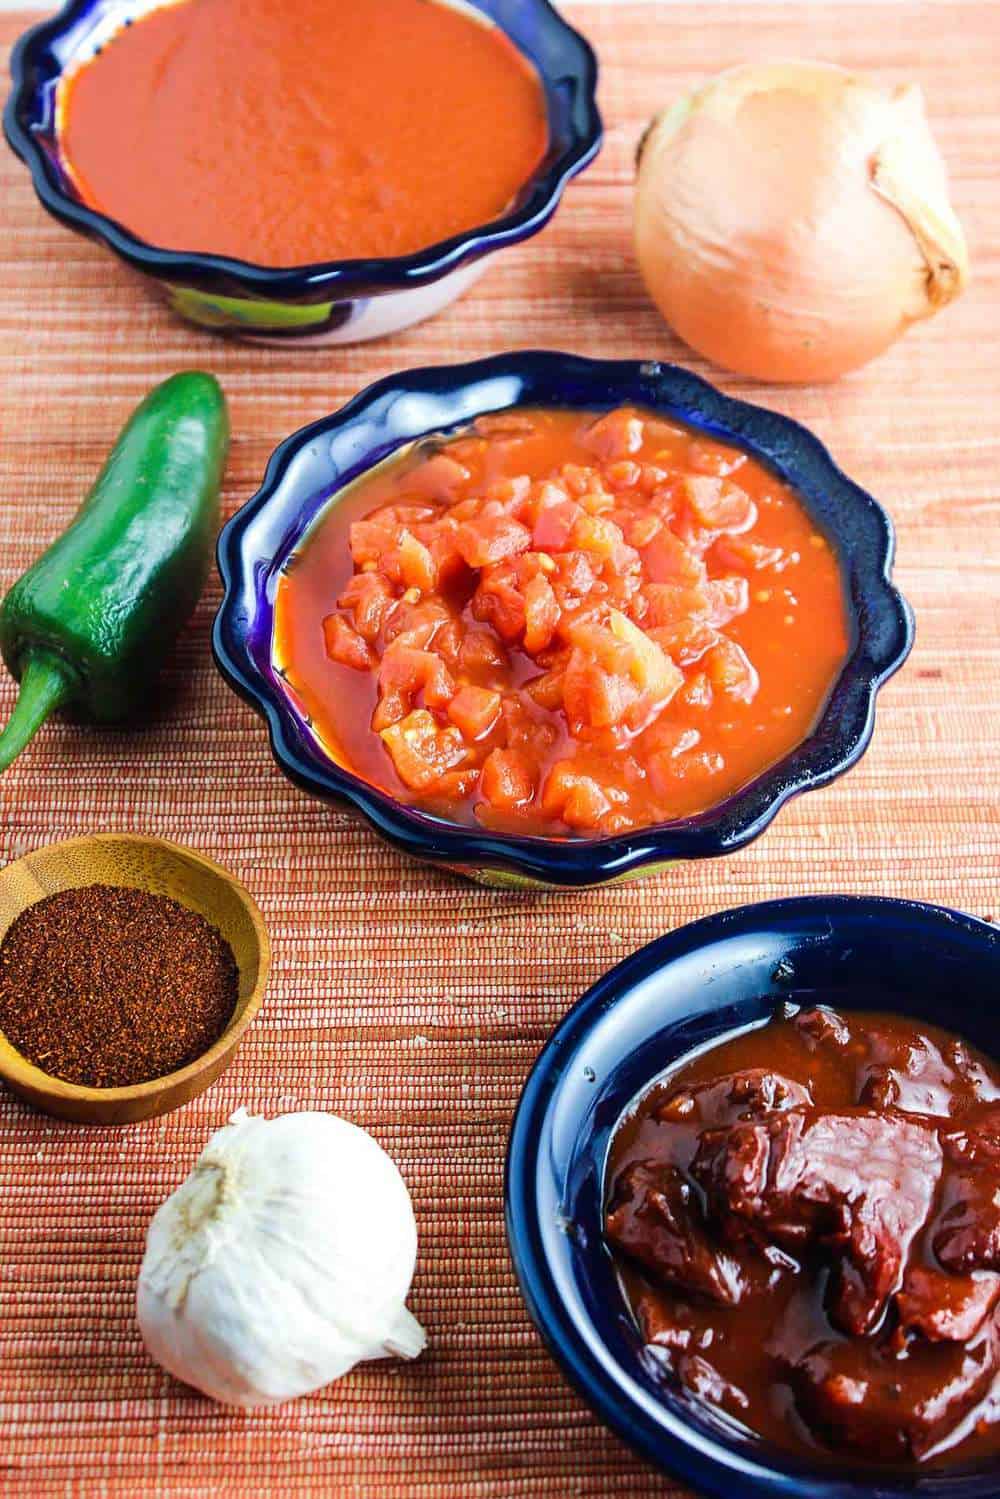 Ranchero sauce recipe